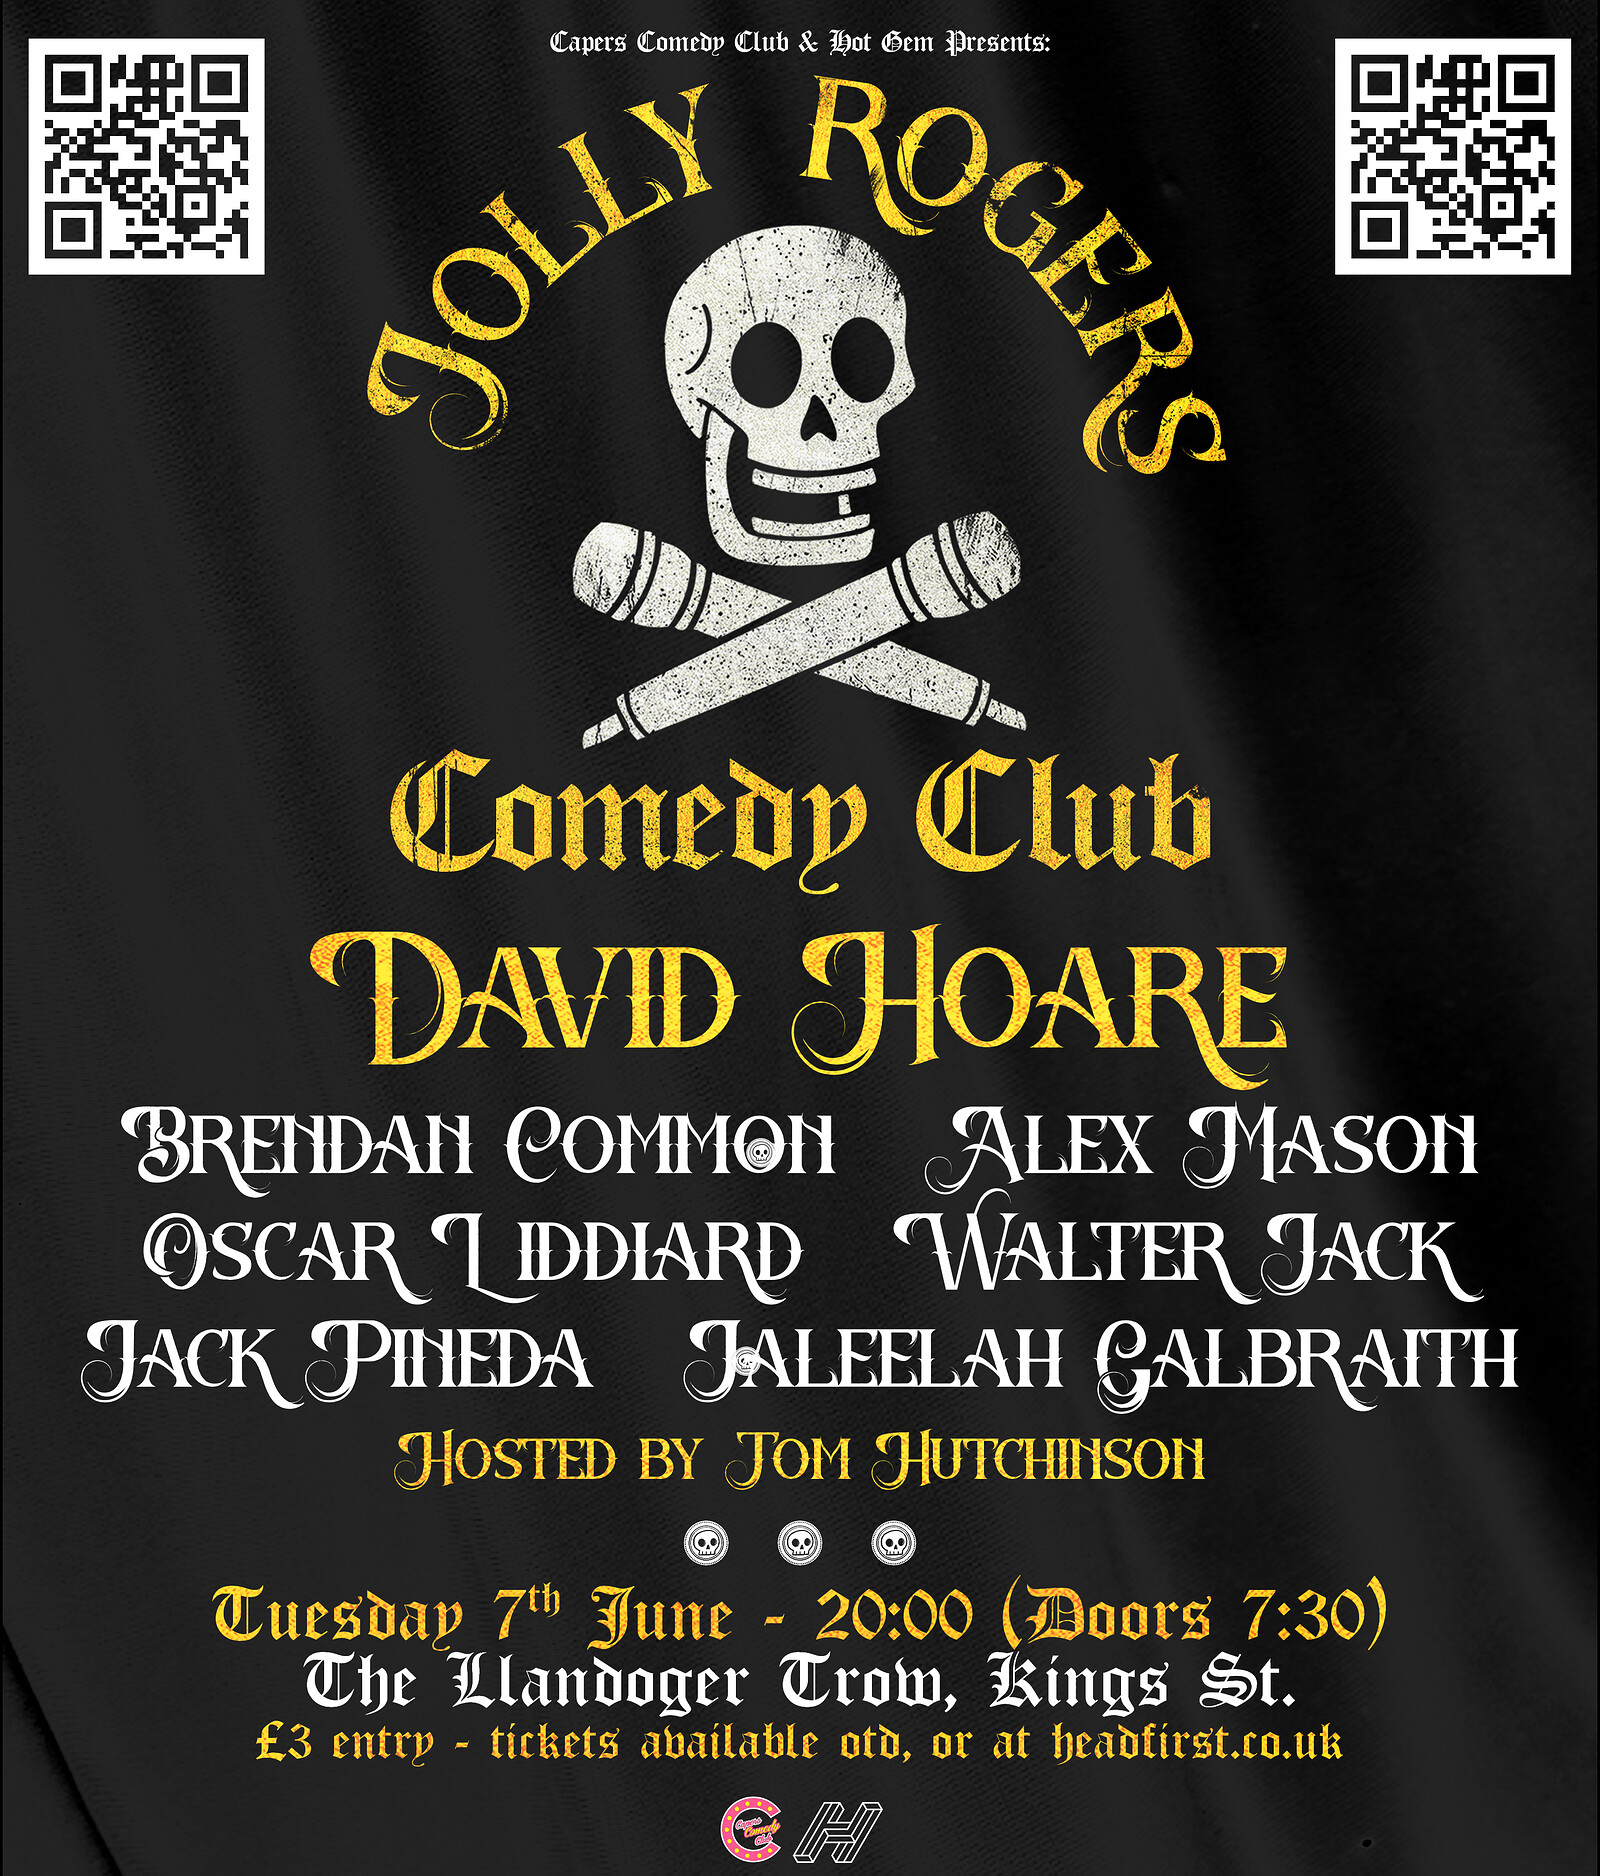 Jolly Rogers Comedy Club - David Hoare at Llandoger Trow